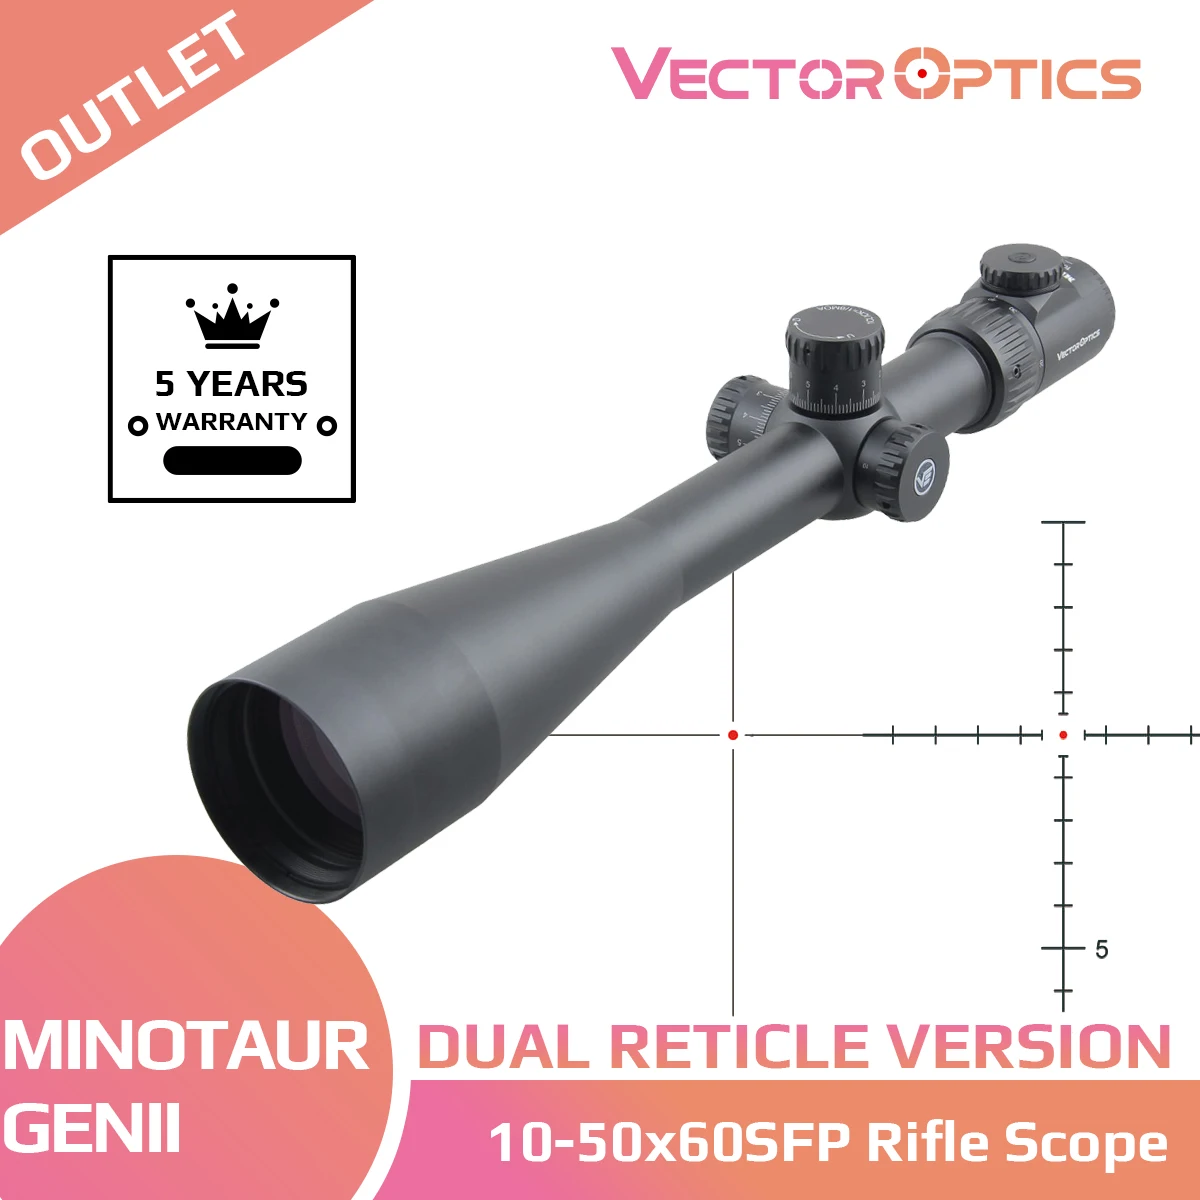 

Vector Optics Minotaur 10-50x60 Hunting Riflescope Tactical Rifle Scope For .308win Long Range & Airgun Field Target Shooting